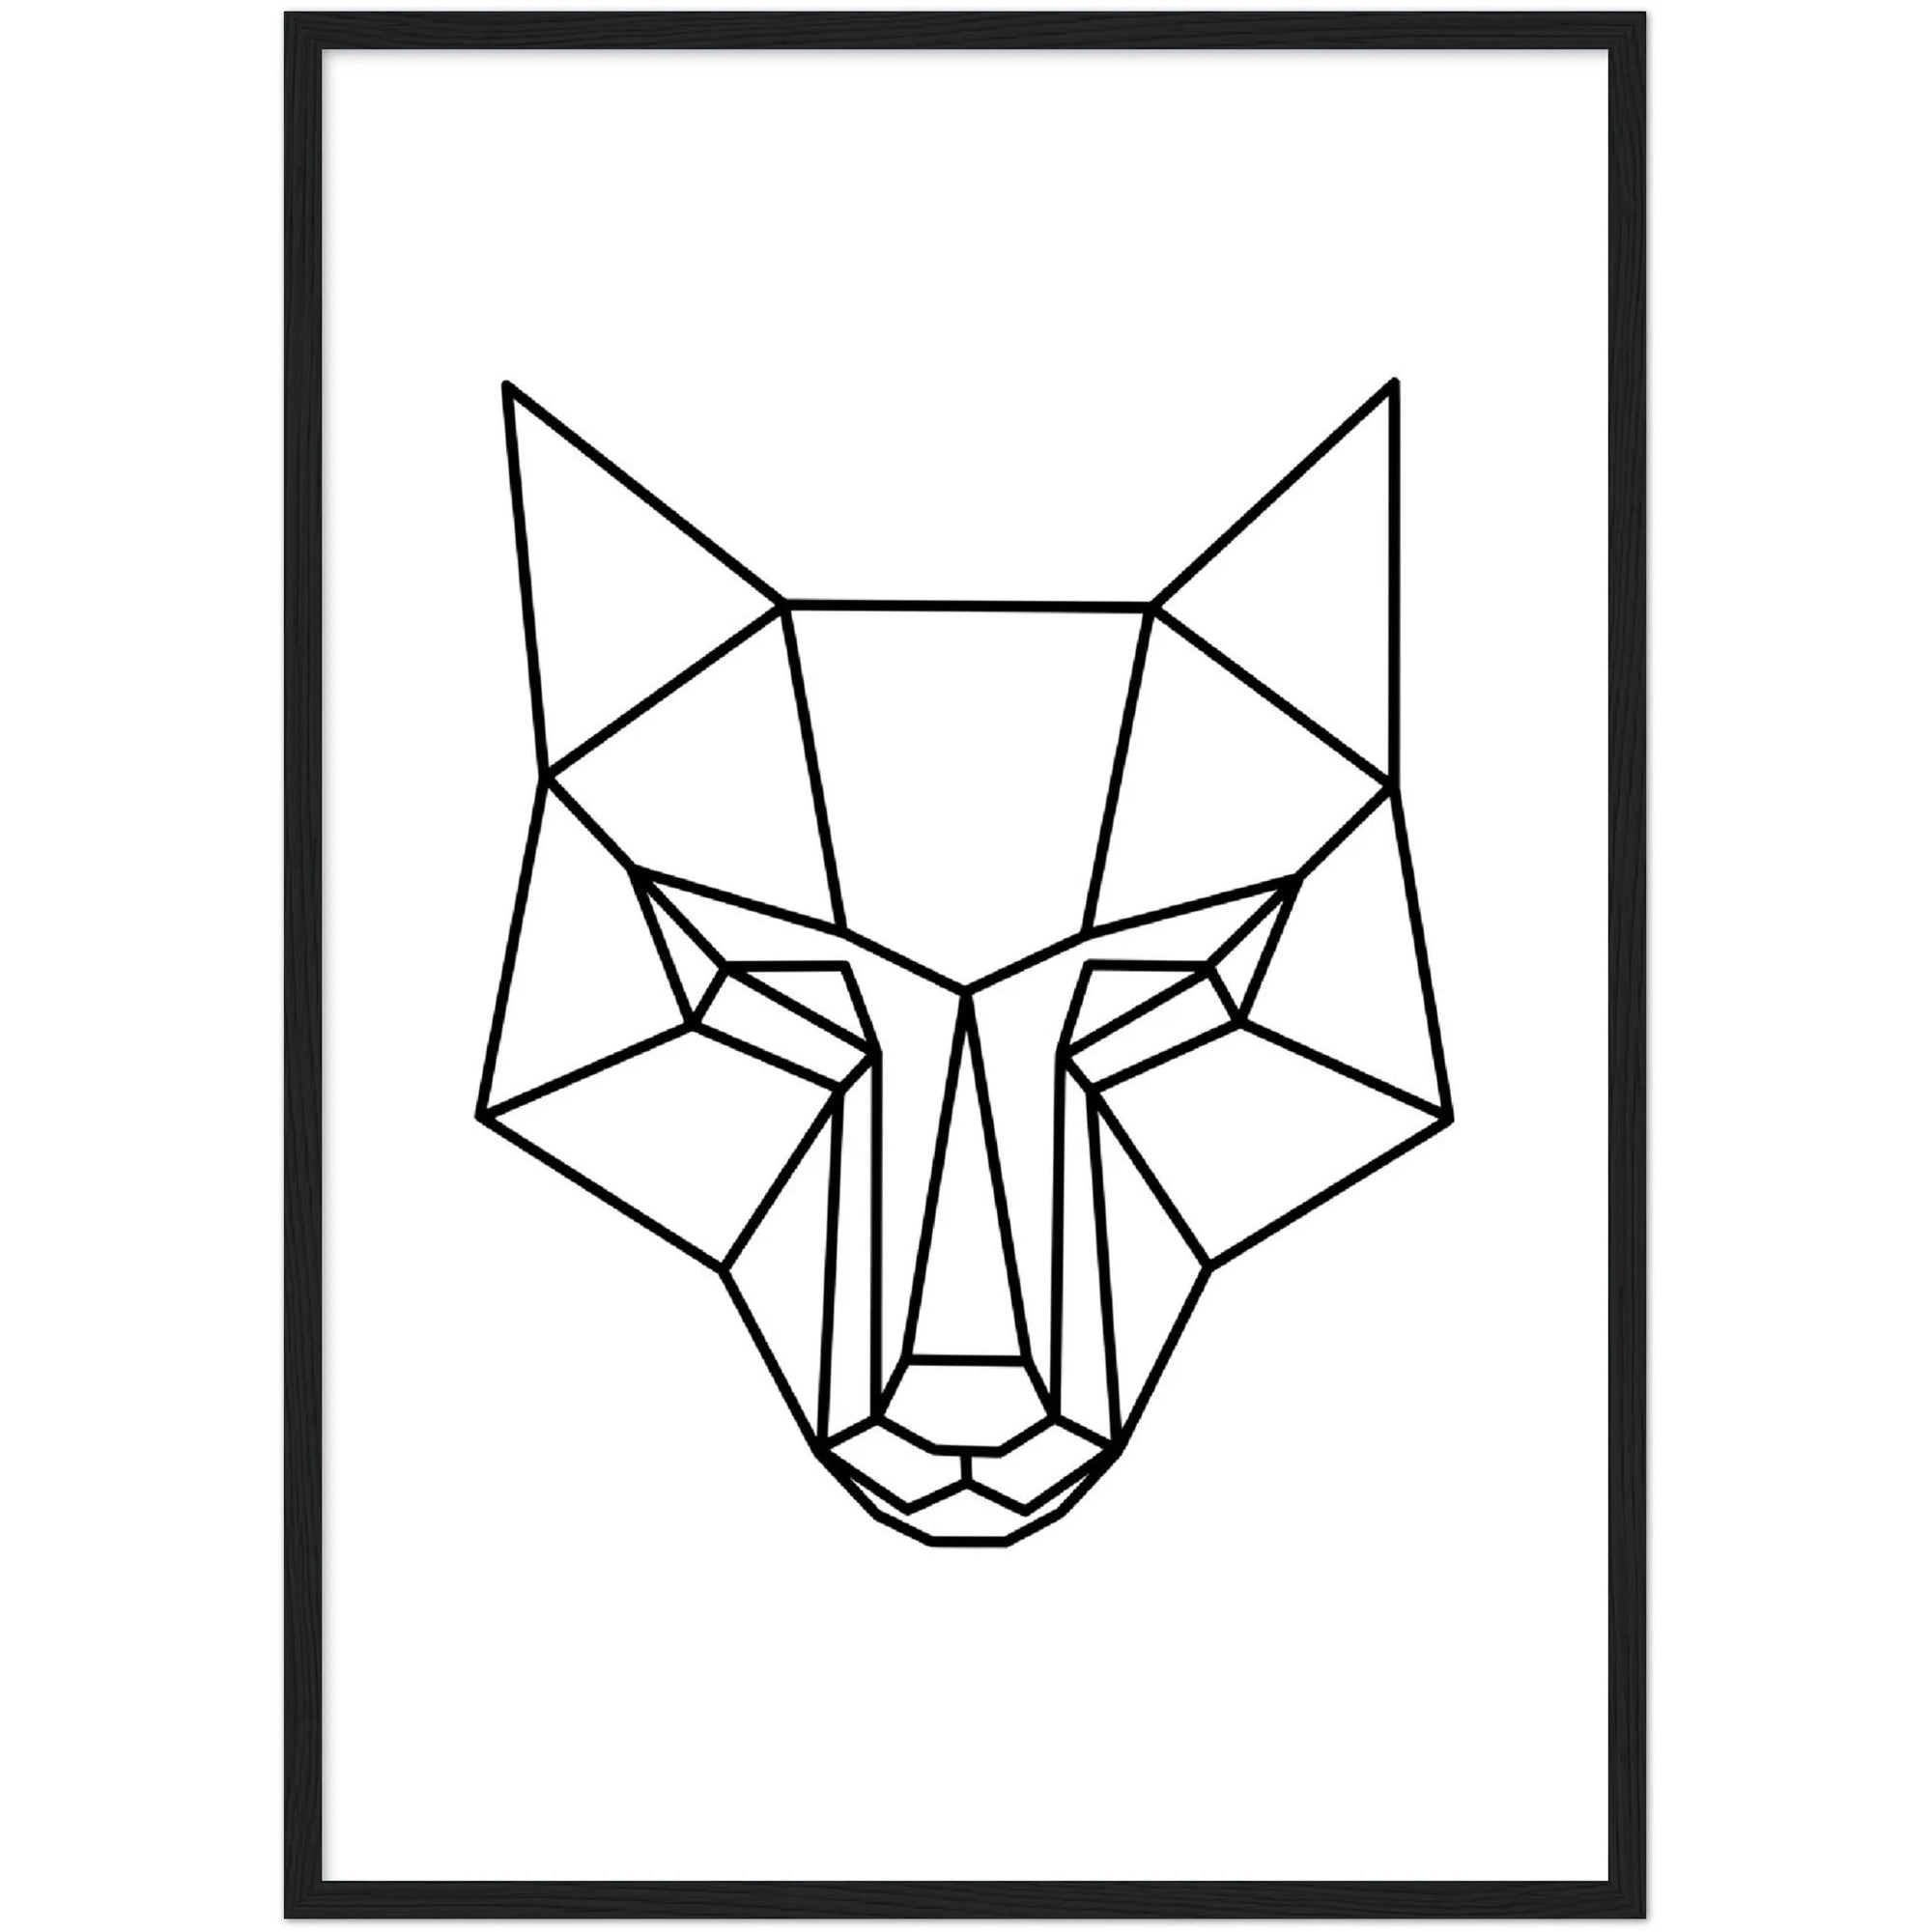 Wolf Geometric Wall Art - The Trendy Art